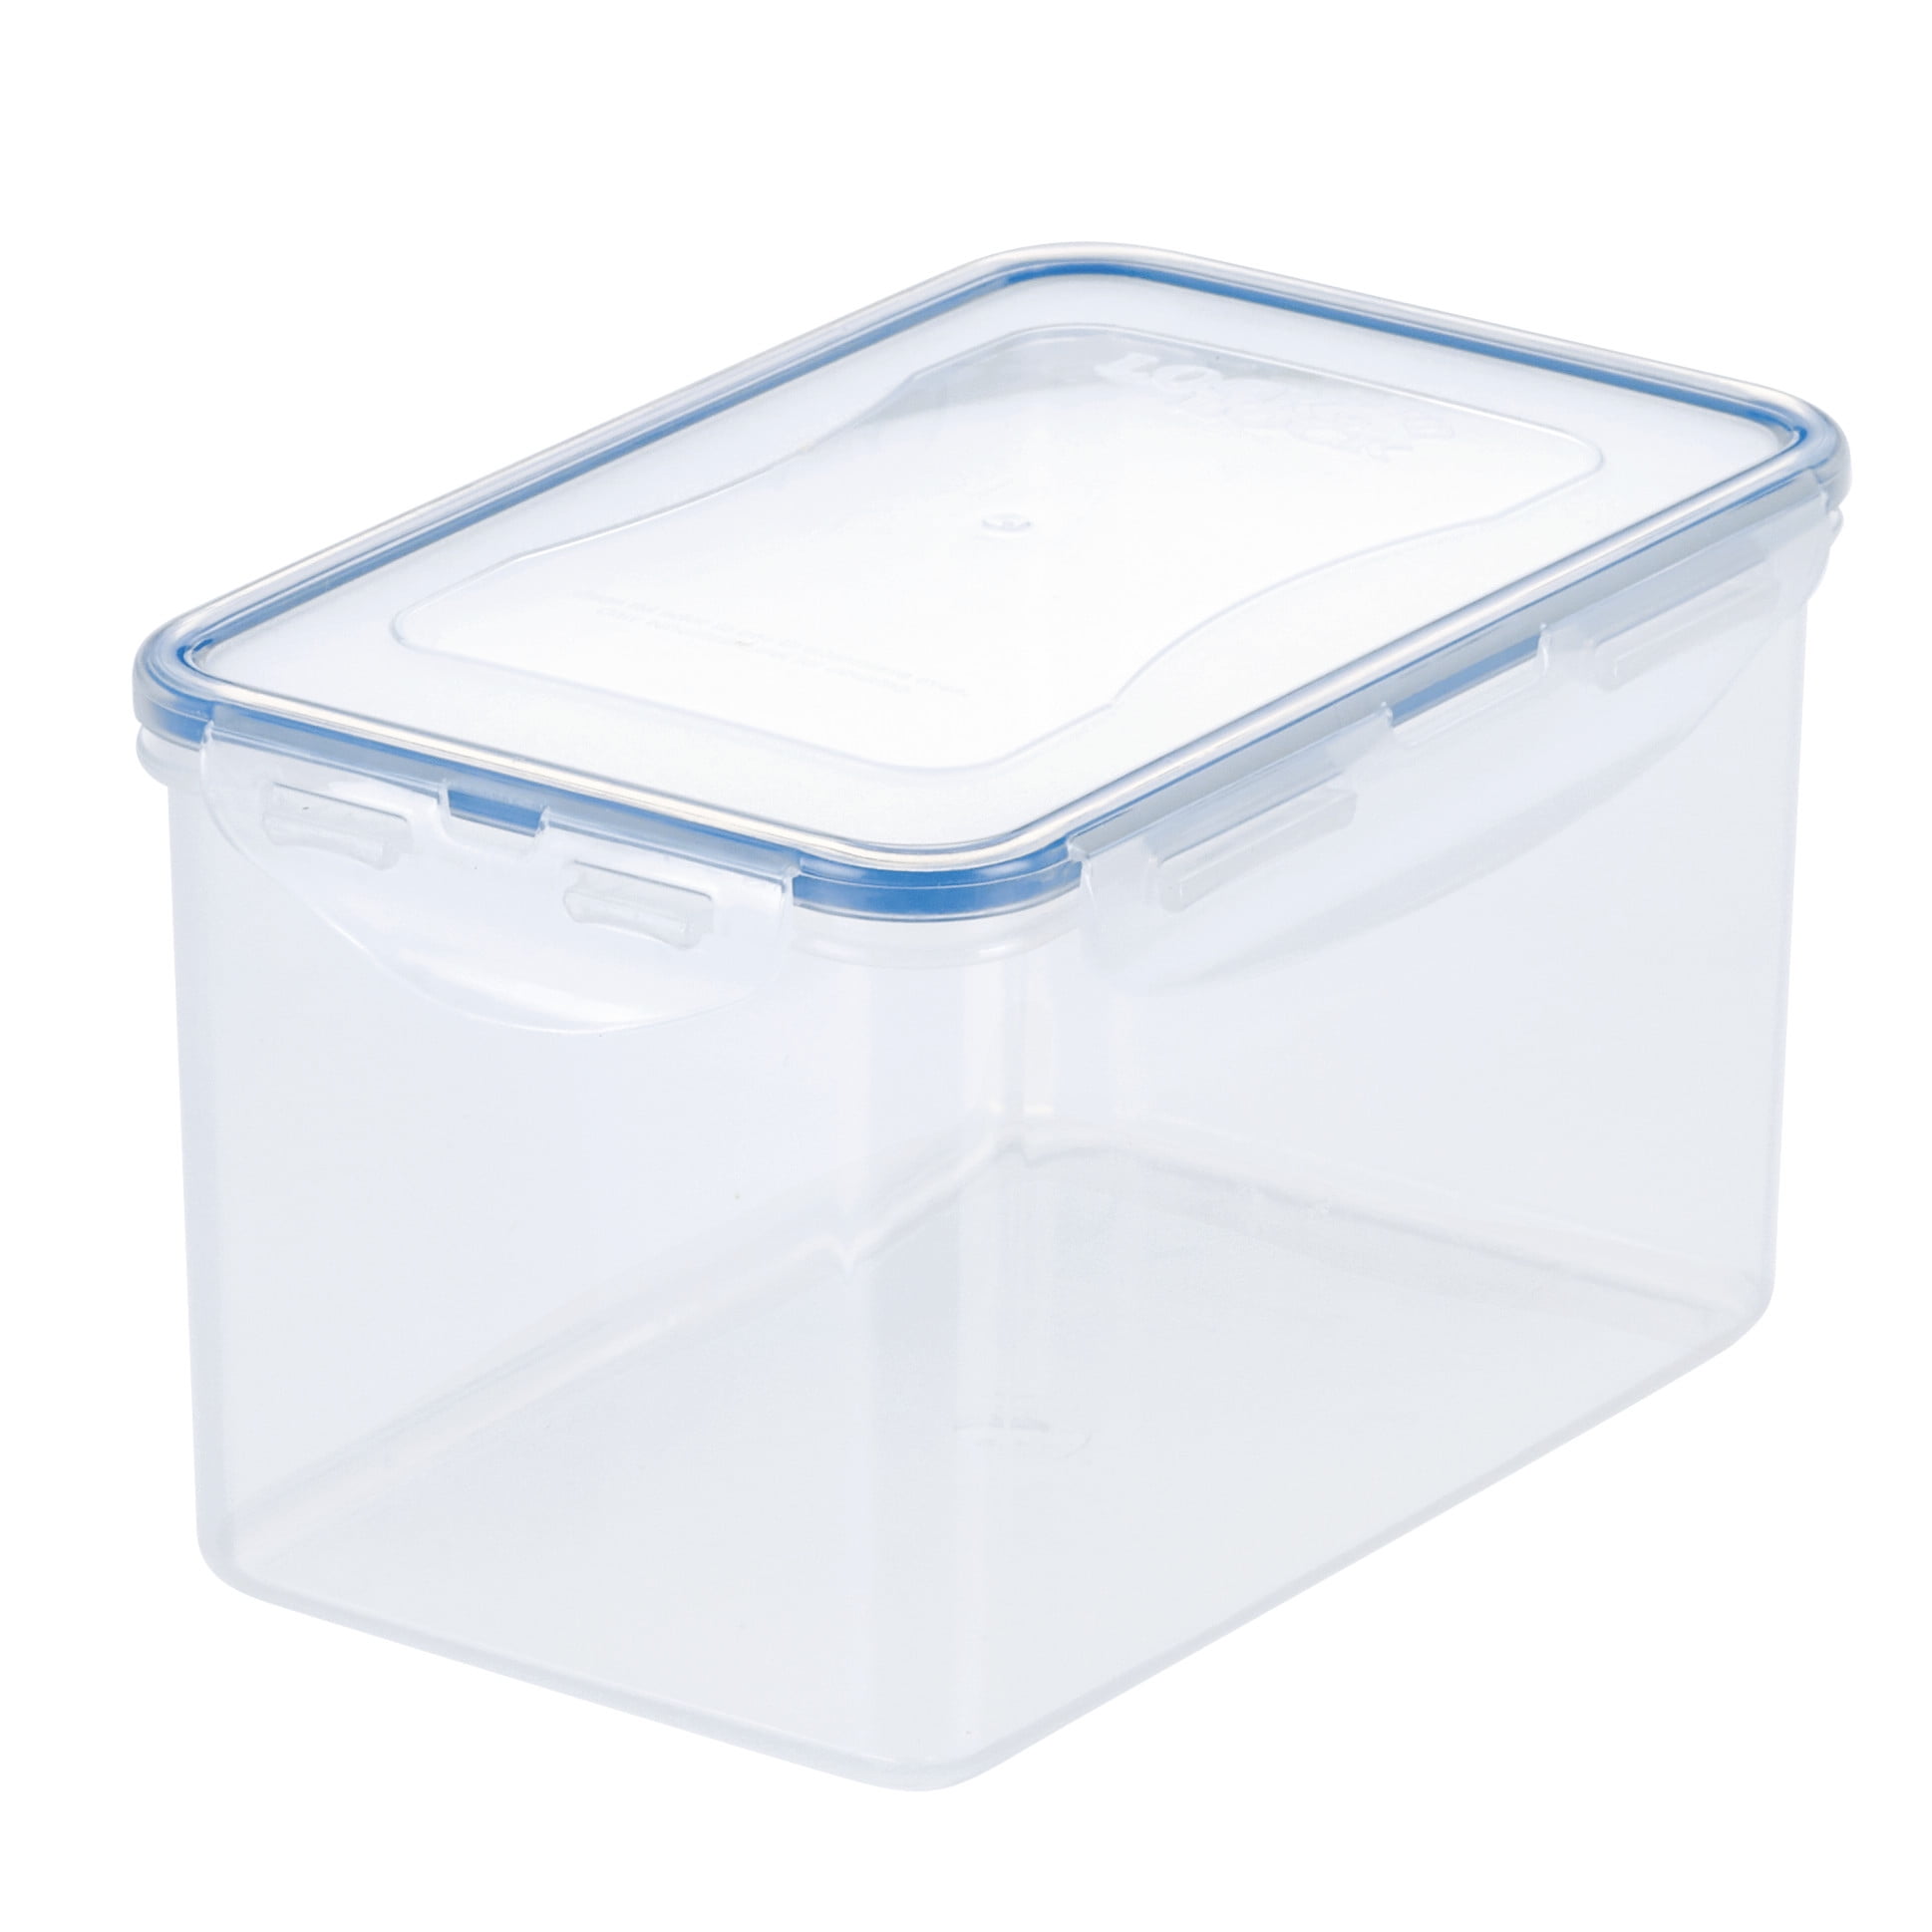 LOCK & LOCK Airtight Rectangular Food Storage Container 33.81-oz / 4.23-cup